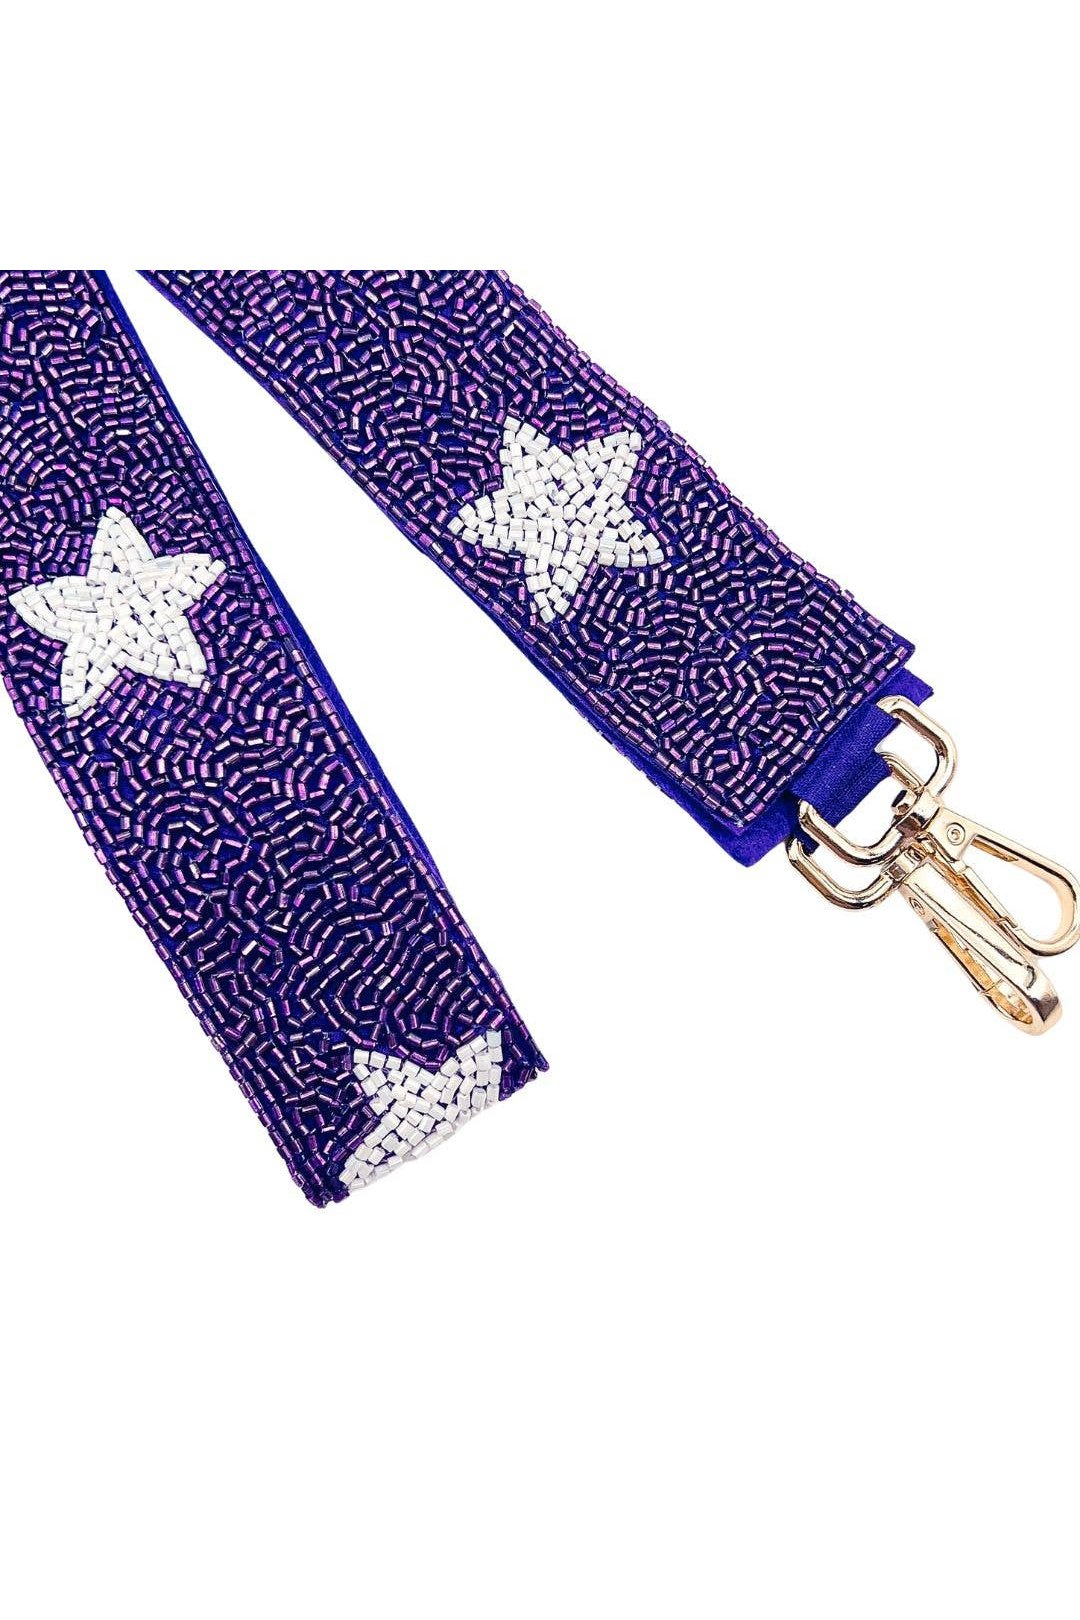 Purple + White Star Beaded Bag Strap - Treasure Jewels Inc. - Color Game